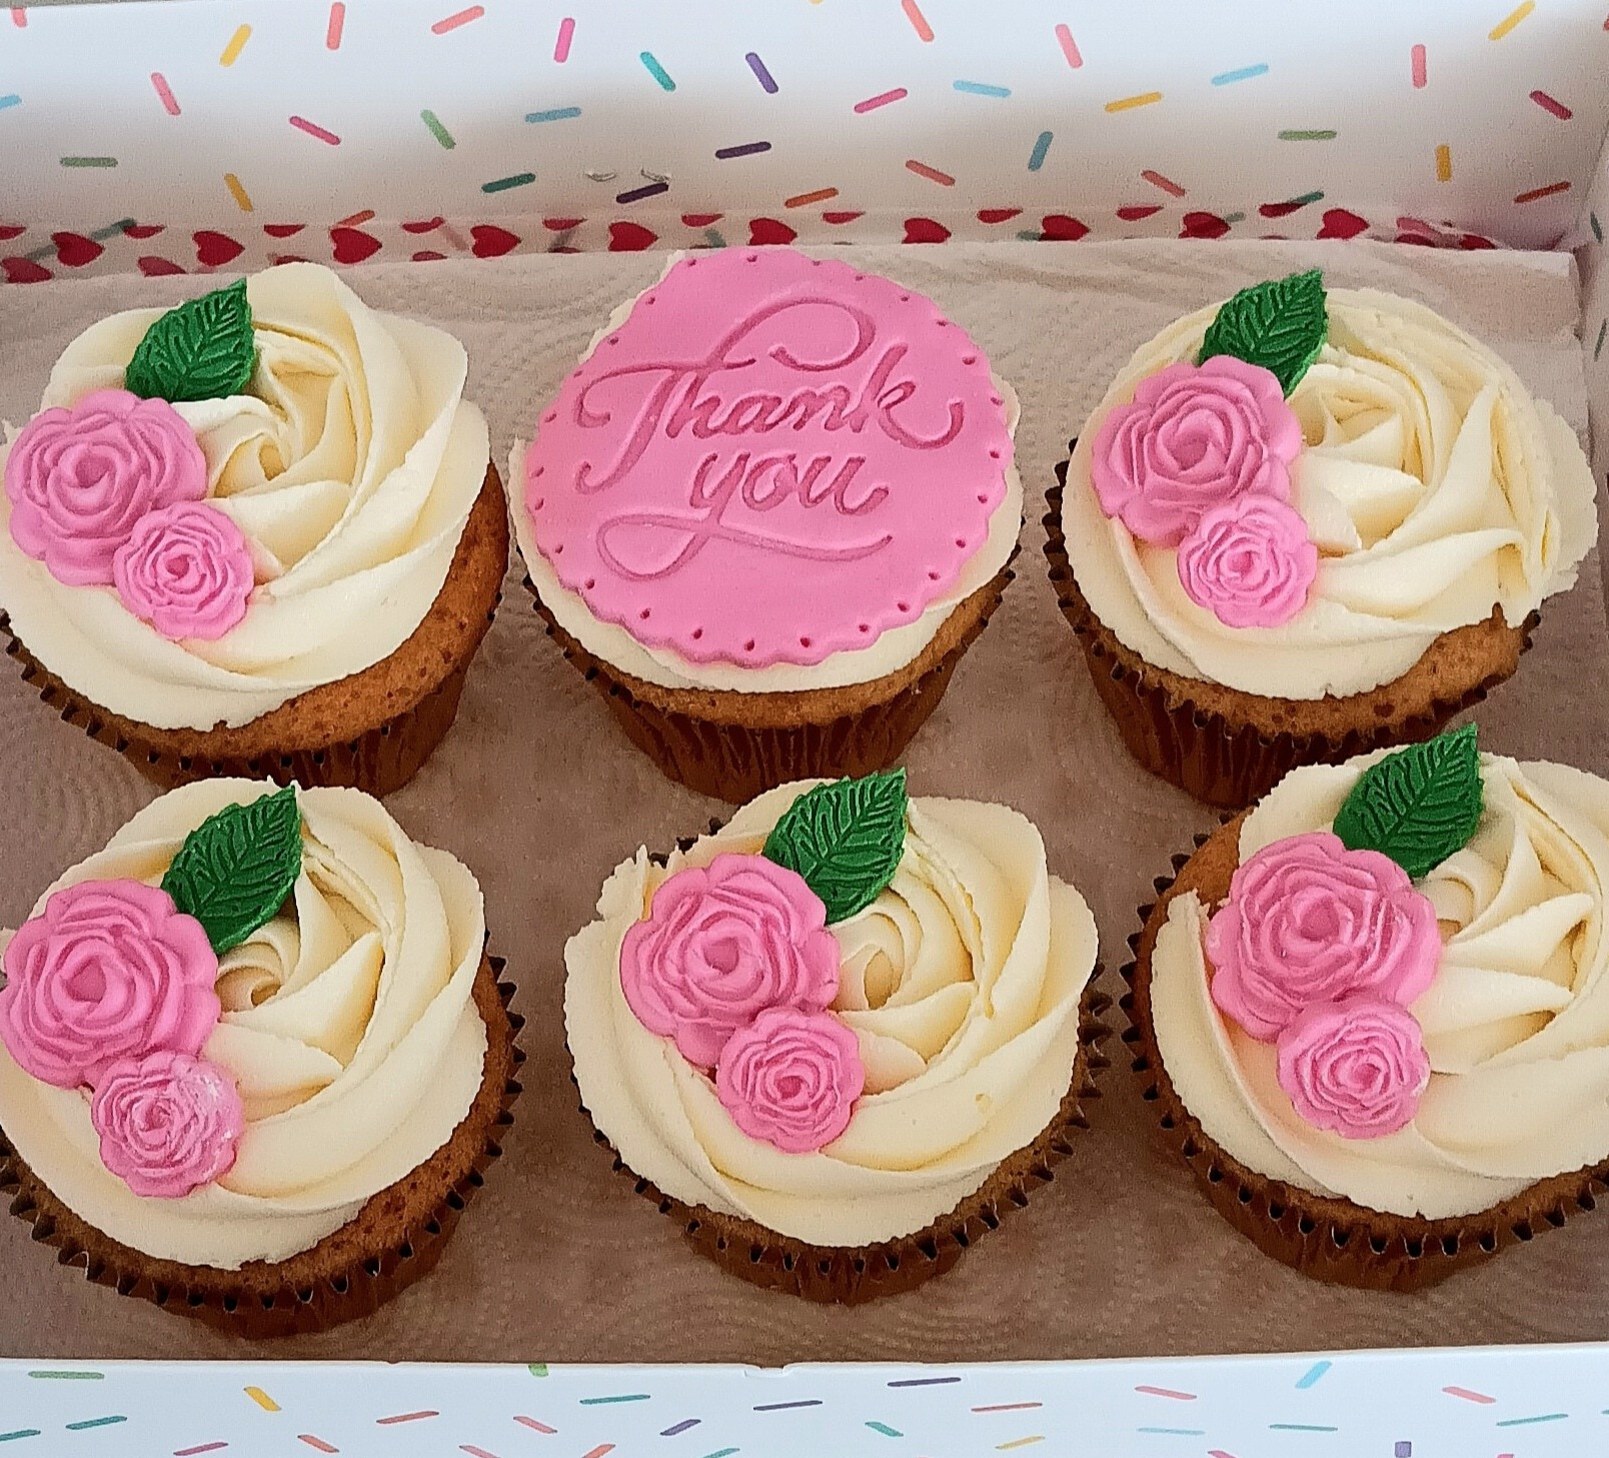 "Thank you" ladies cupcakes